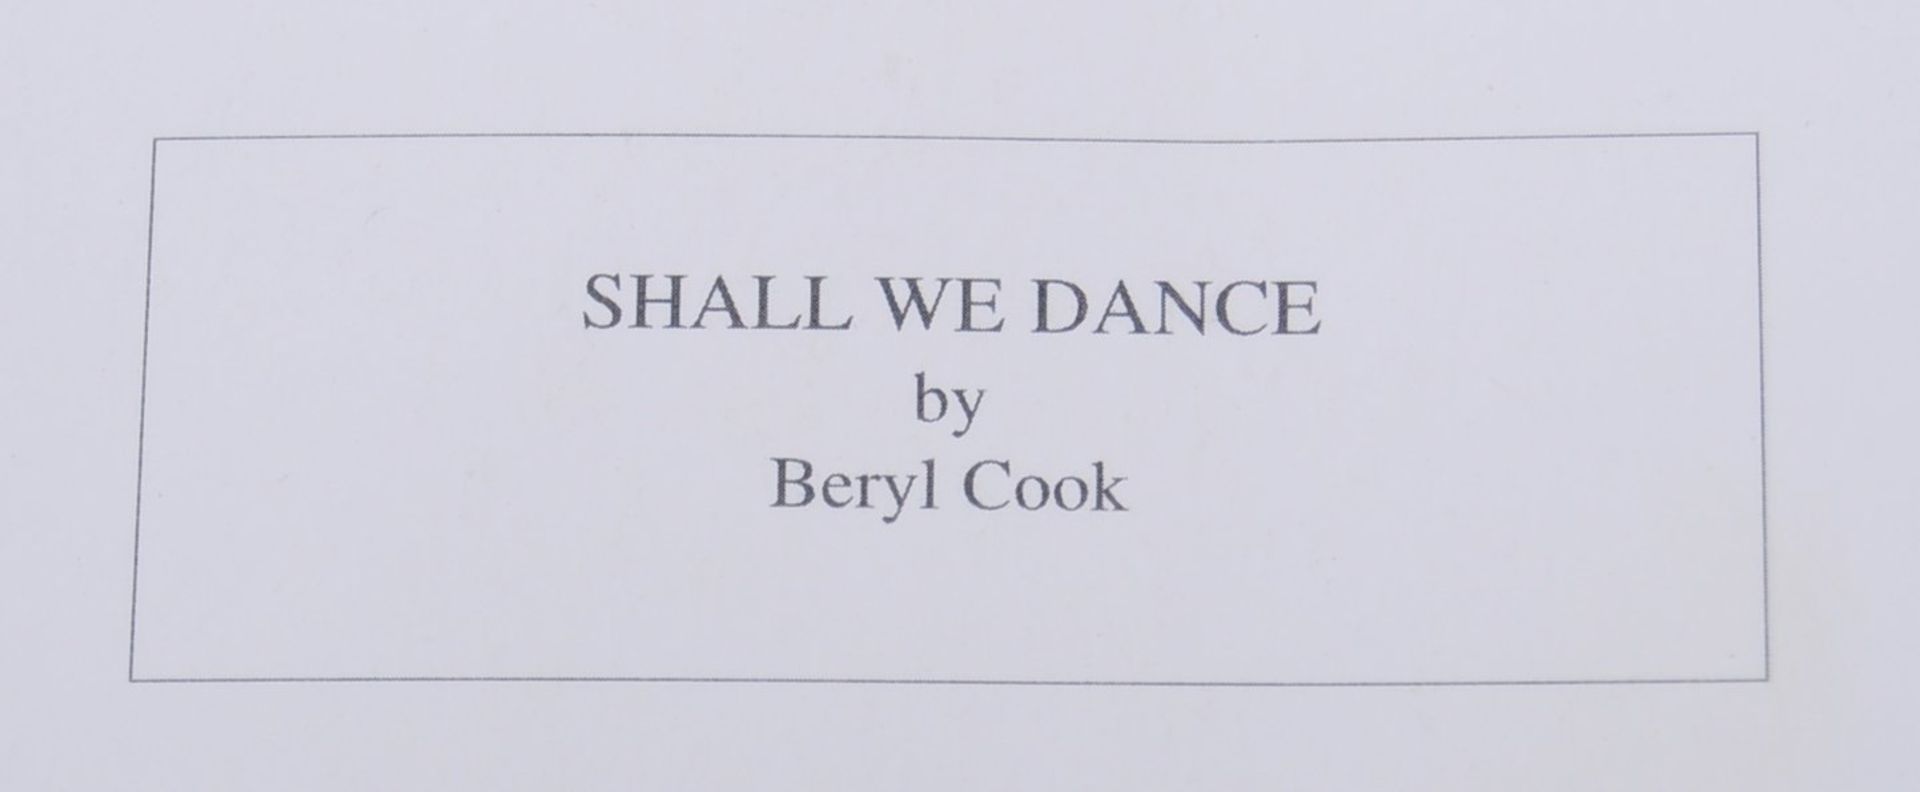 BERYL COOK SIGNED PRINT ENTITLED ' SHALL WE DANCE ' - Image 4 of 6